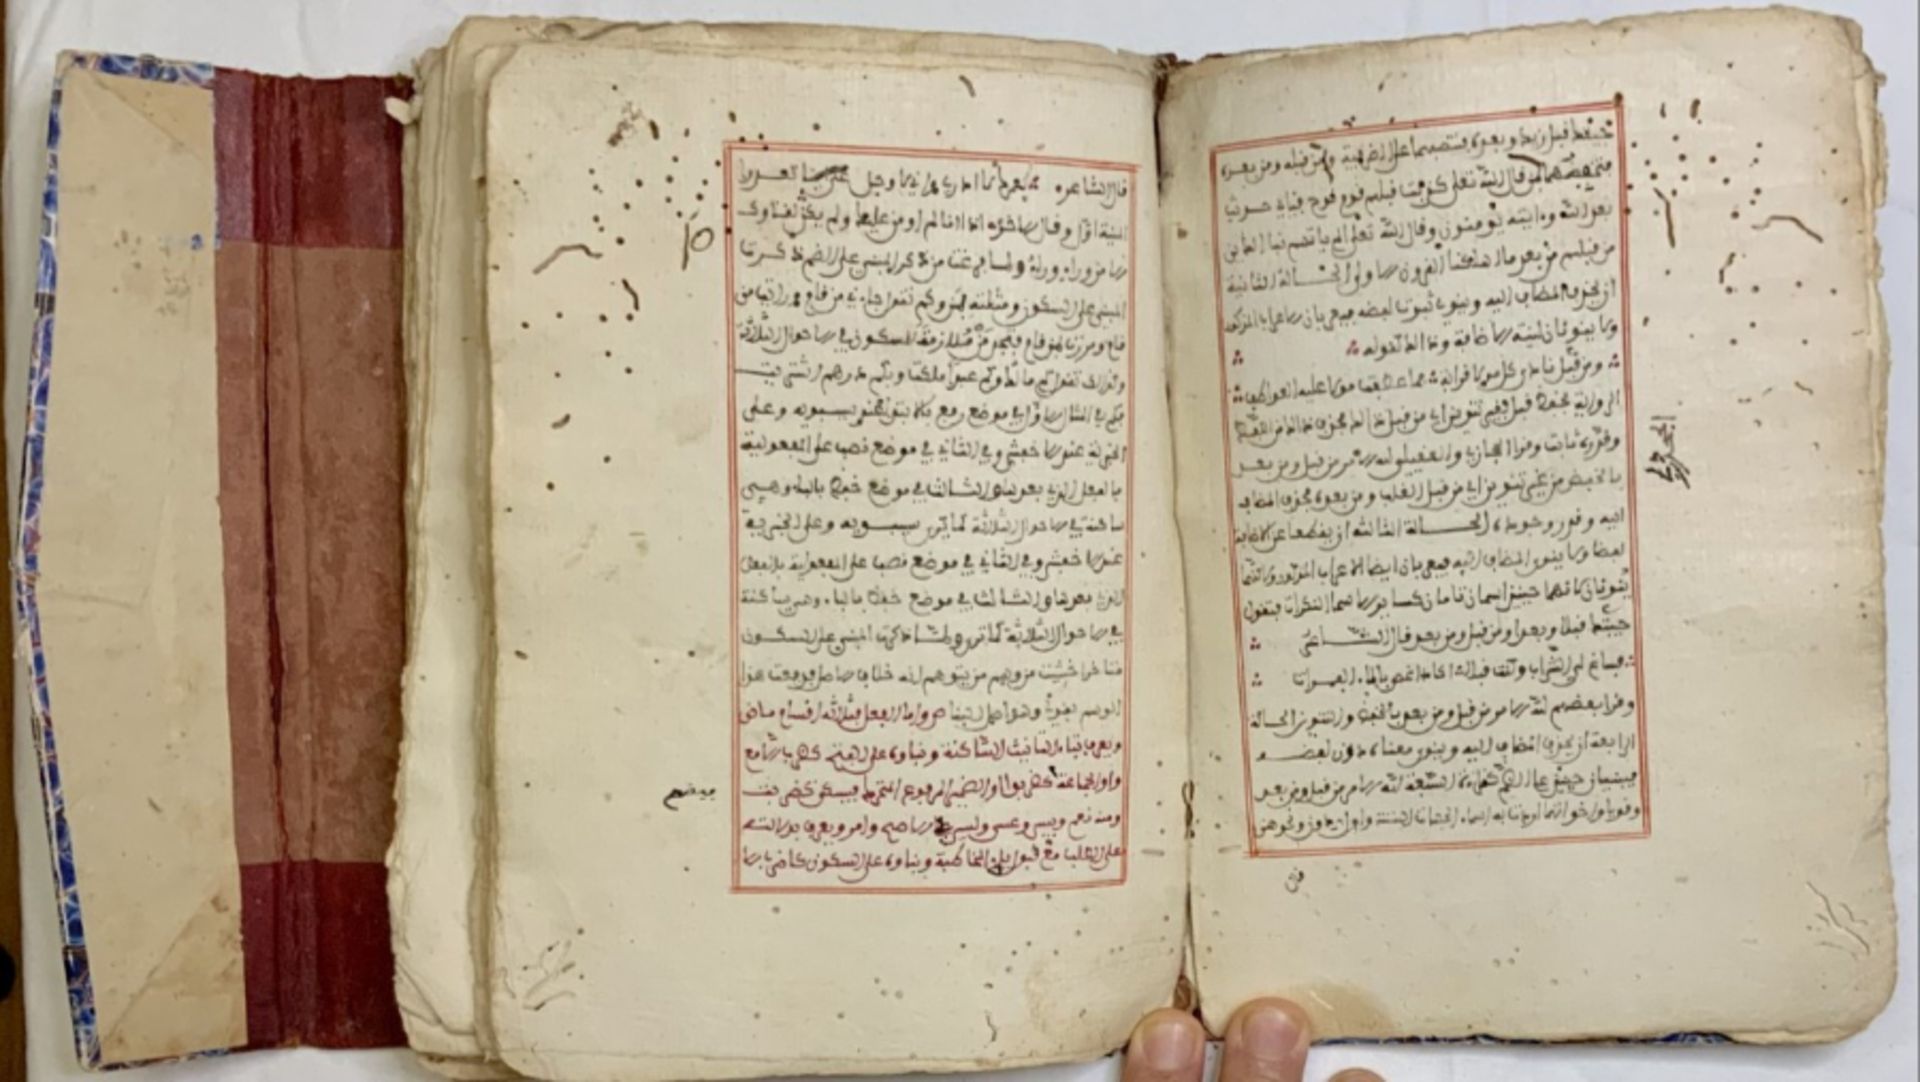 18th century Islamic manuscript on morphology and rhetoric - Image 4 of 18